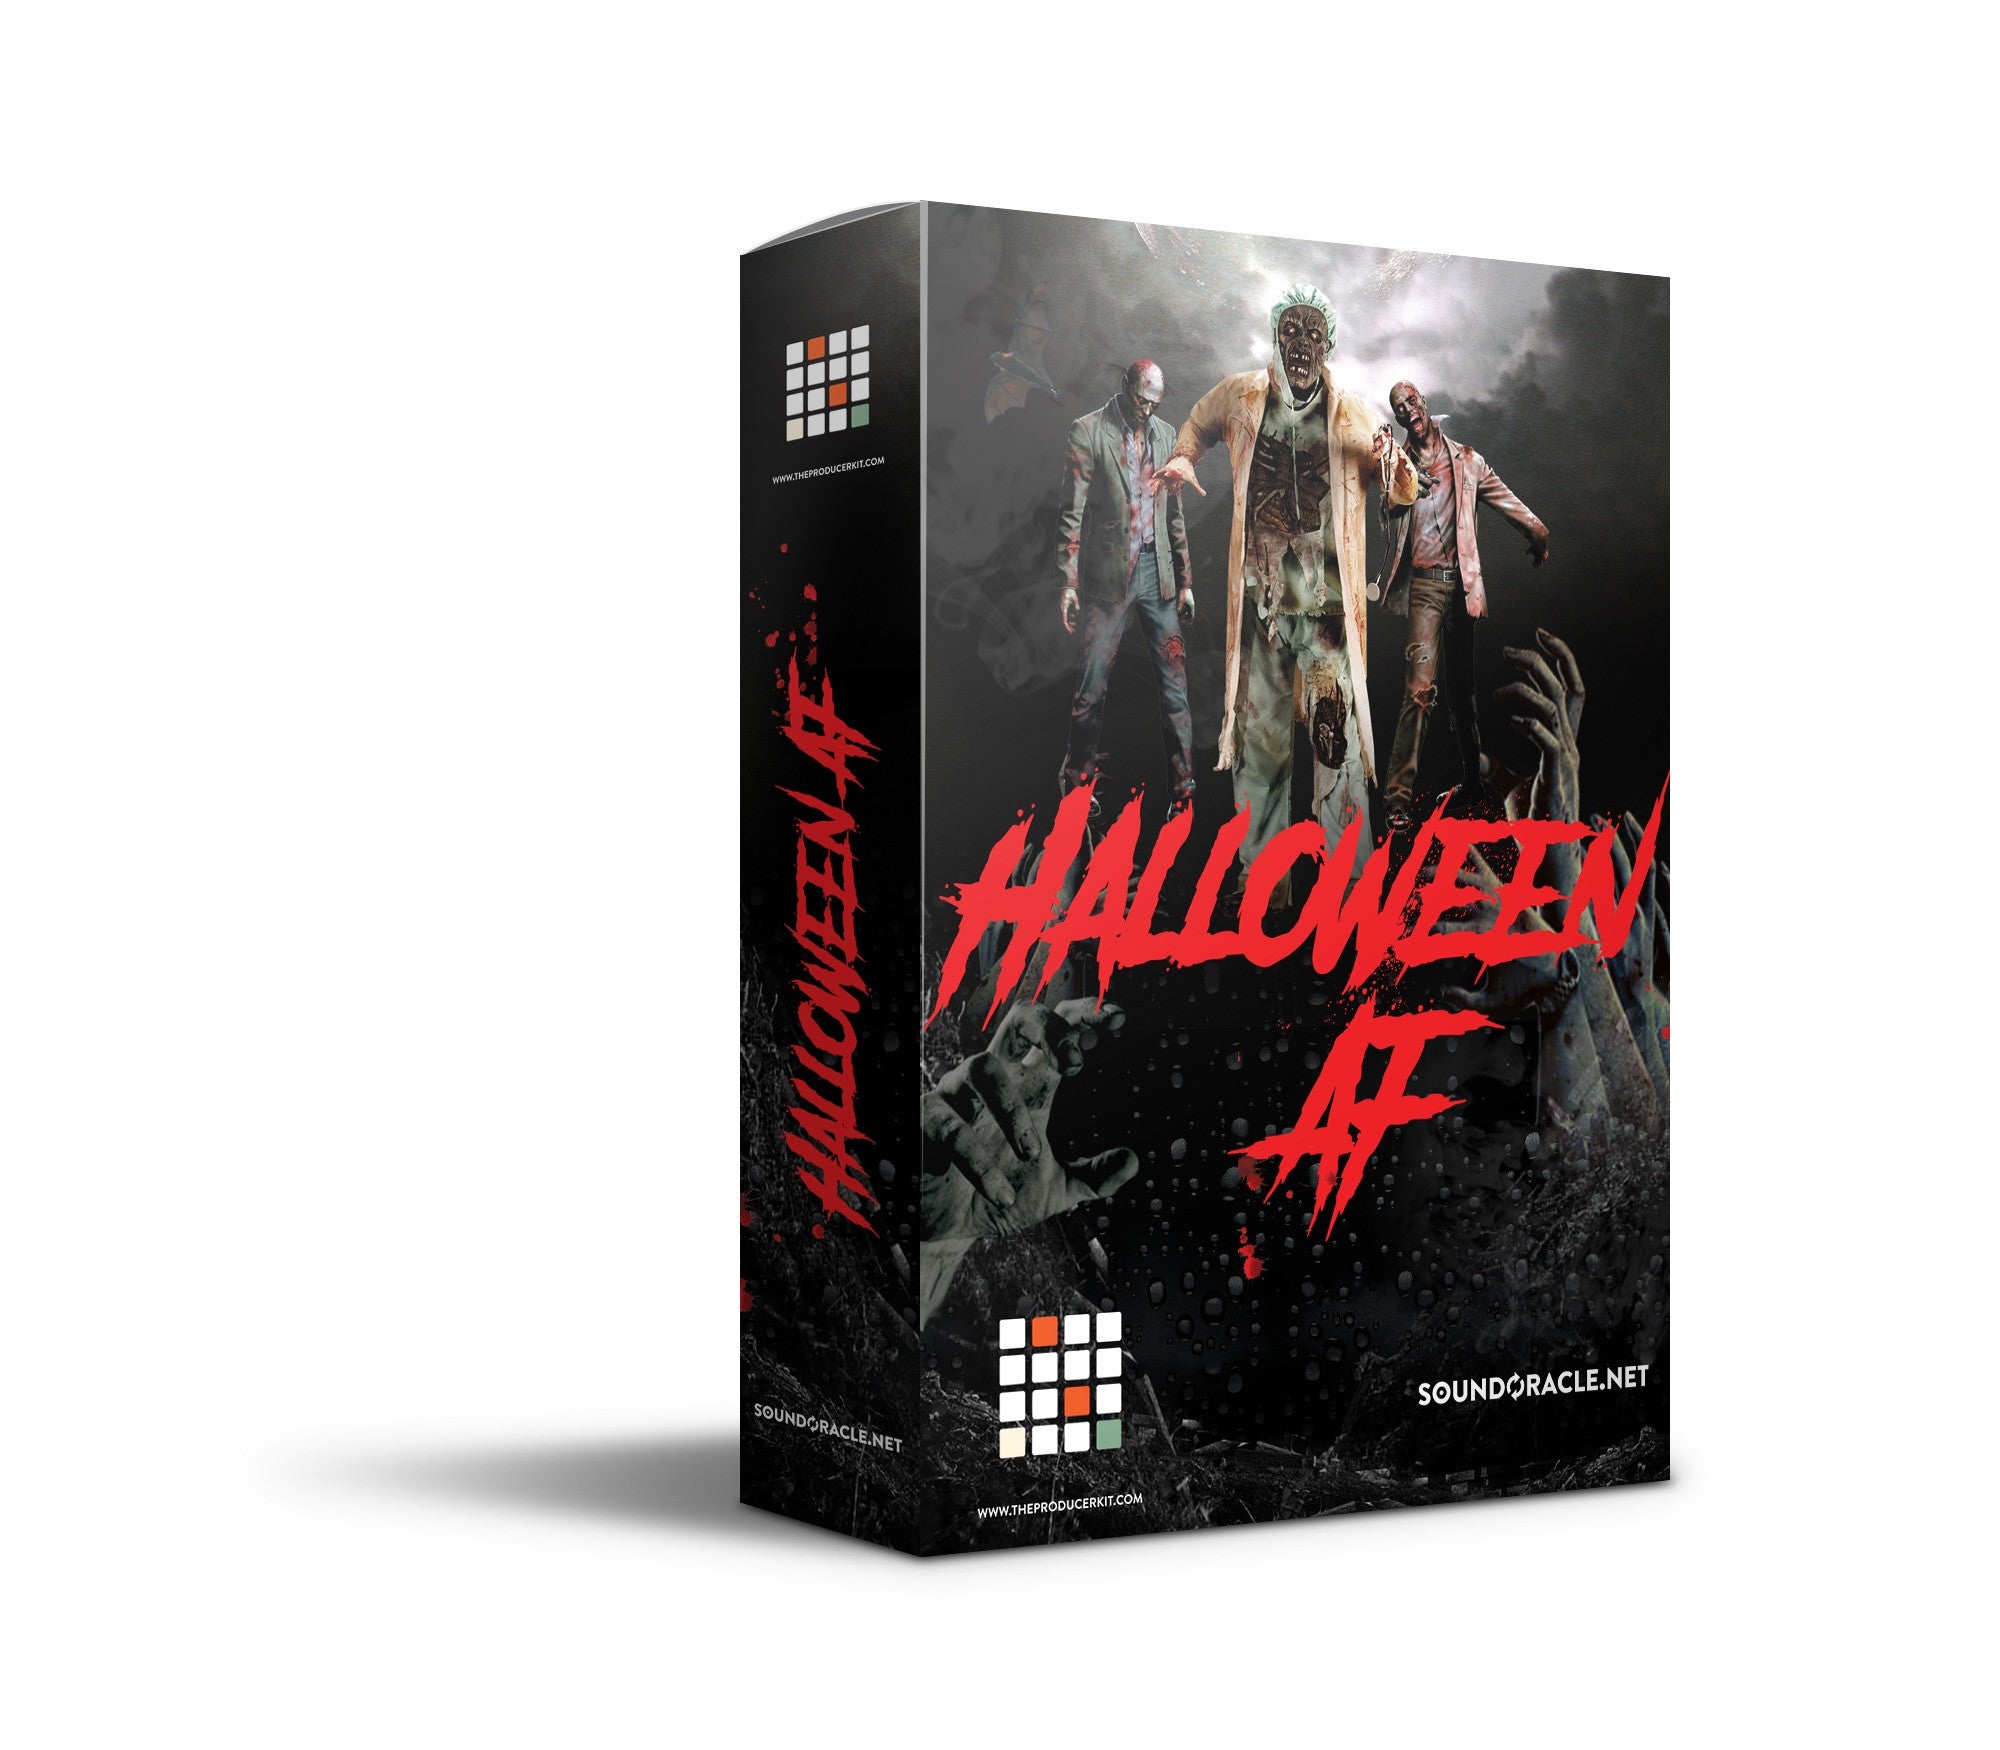 Sound Oracle & Producer Kit presents "Halloween AF." 1 FREE Sound Kit